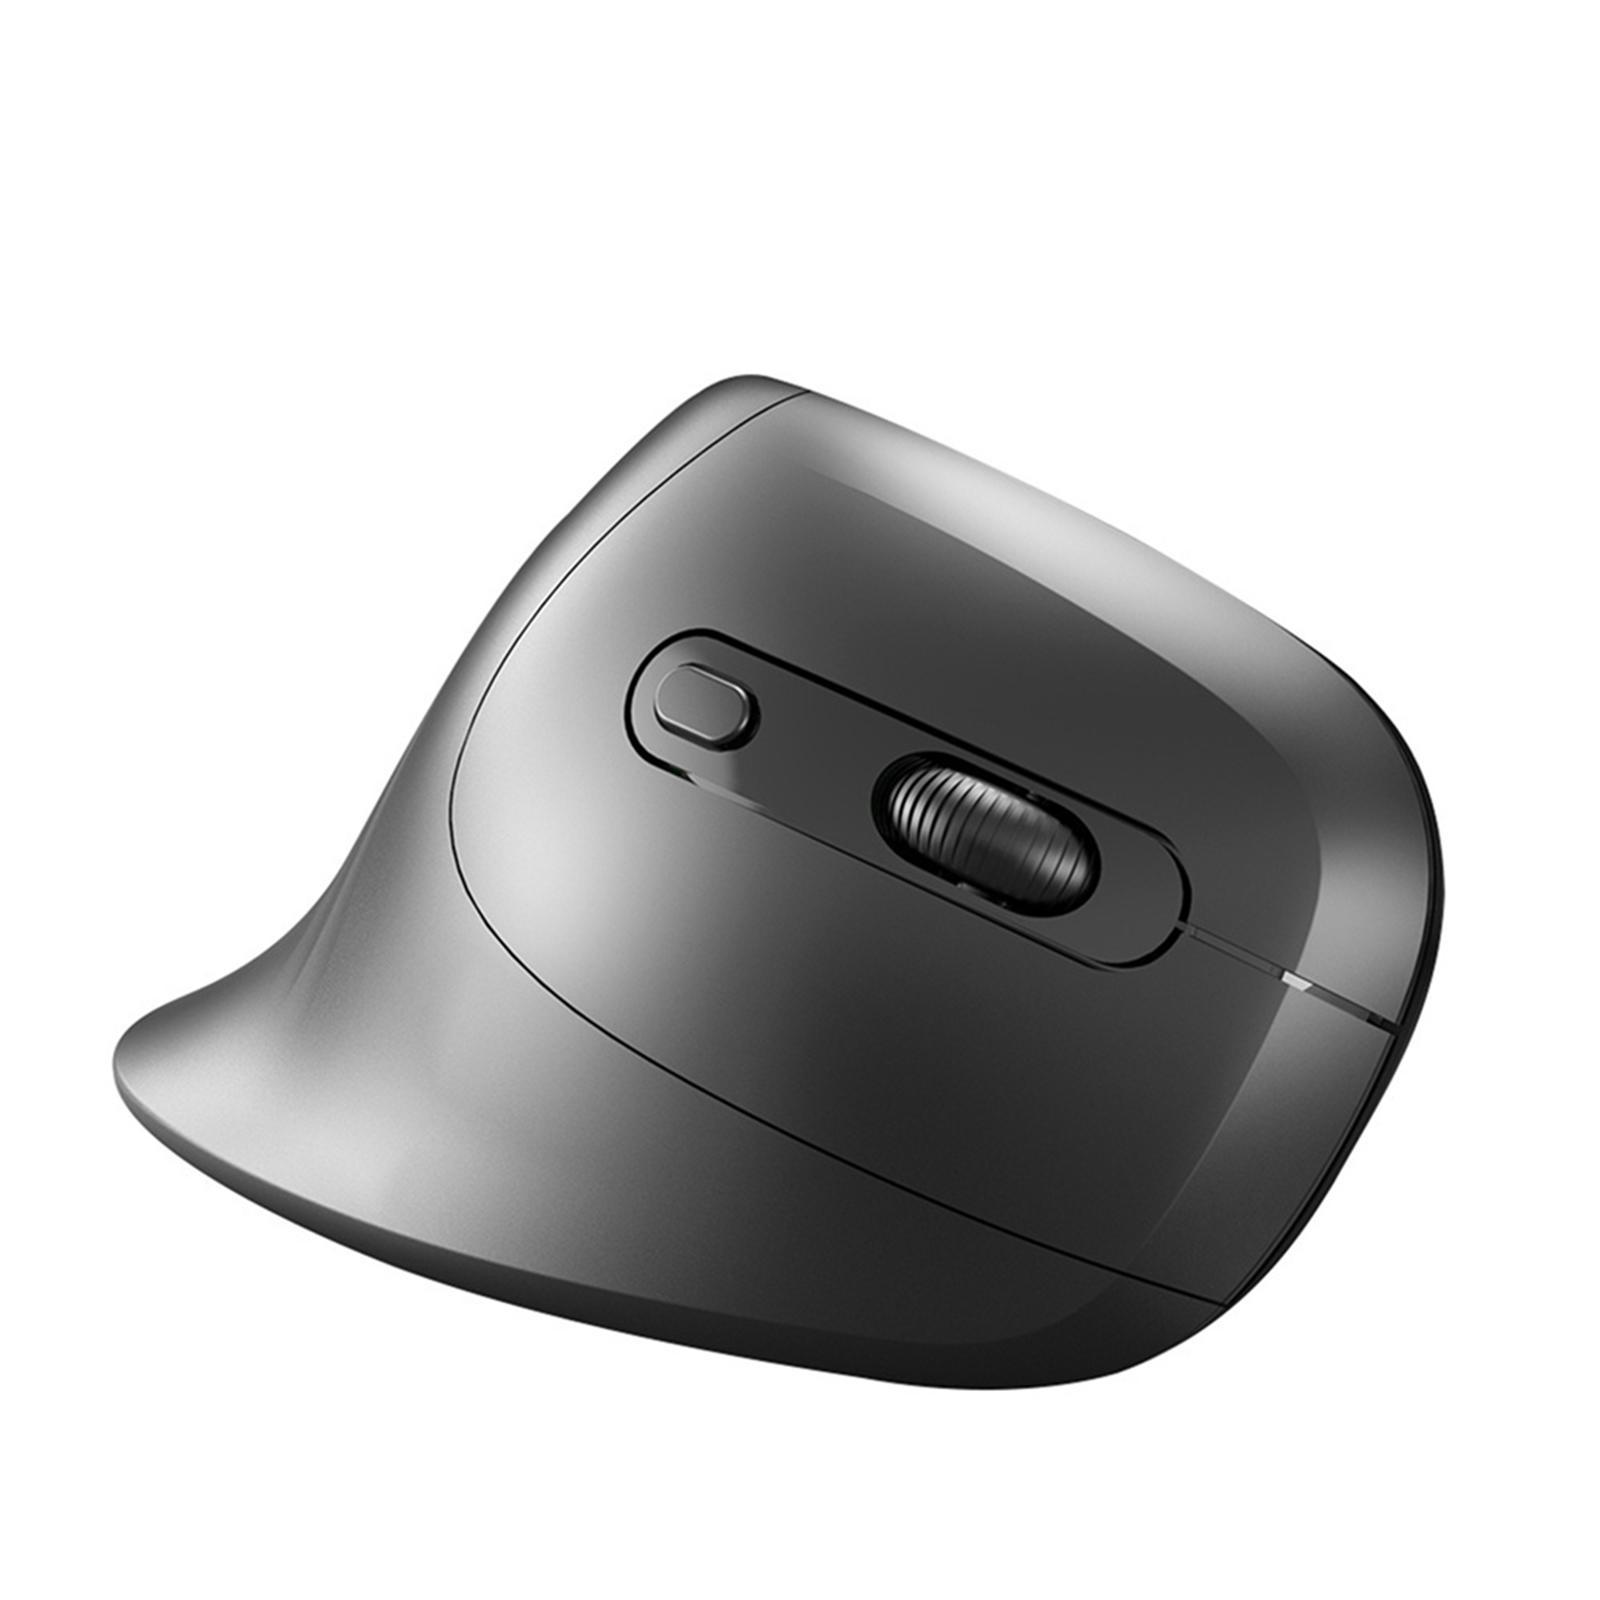 Vertical Mouse Ergonomic 4 Adjustable DPI 6 Buttons for Laptop PC Notebook